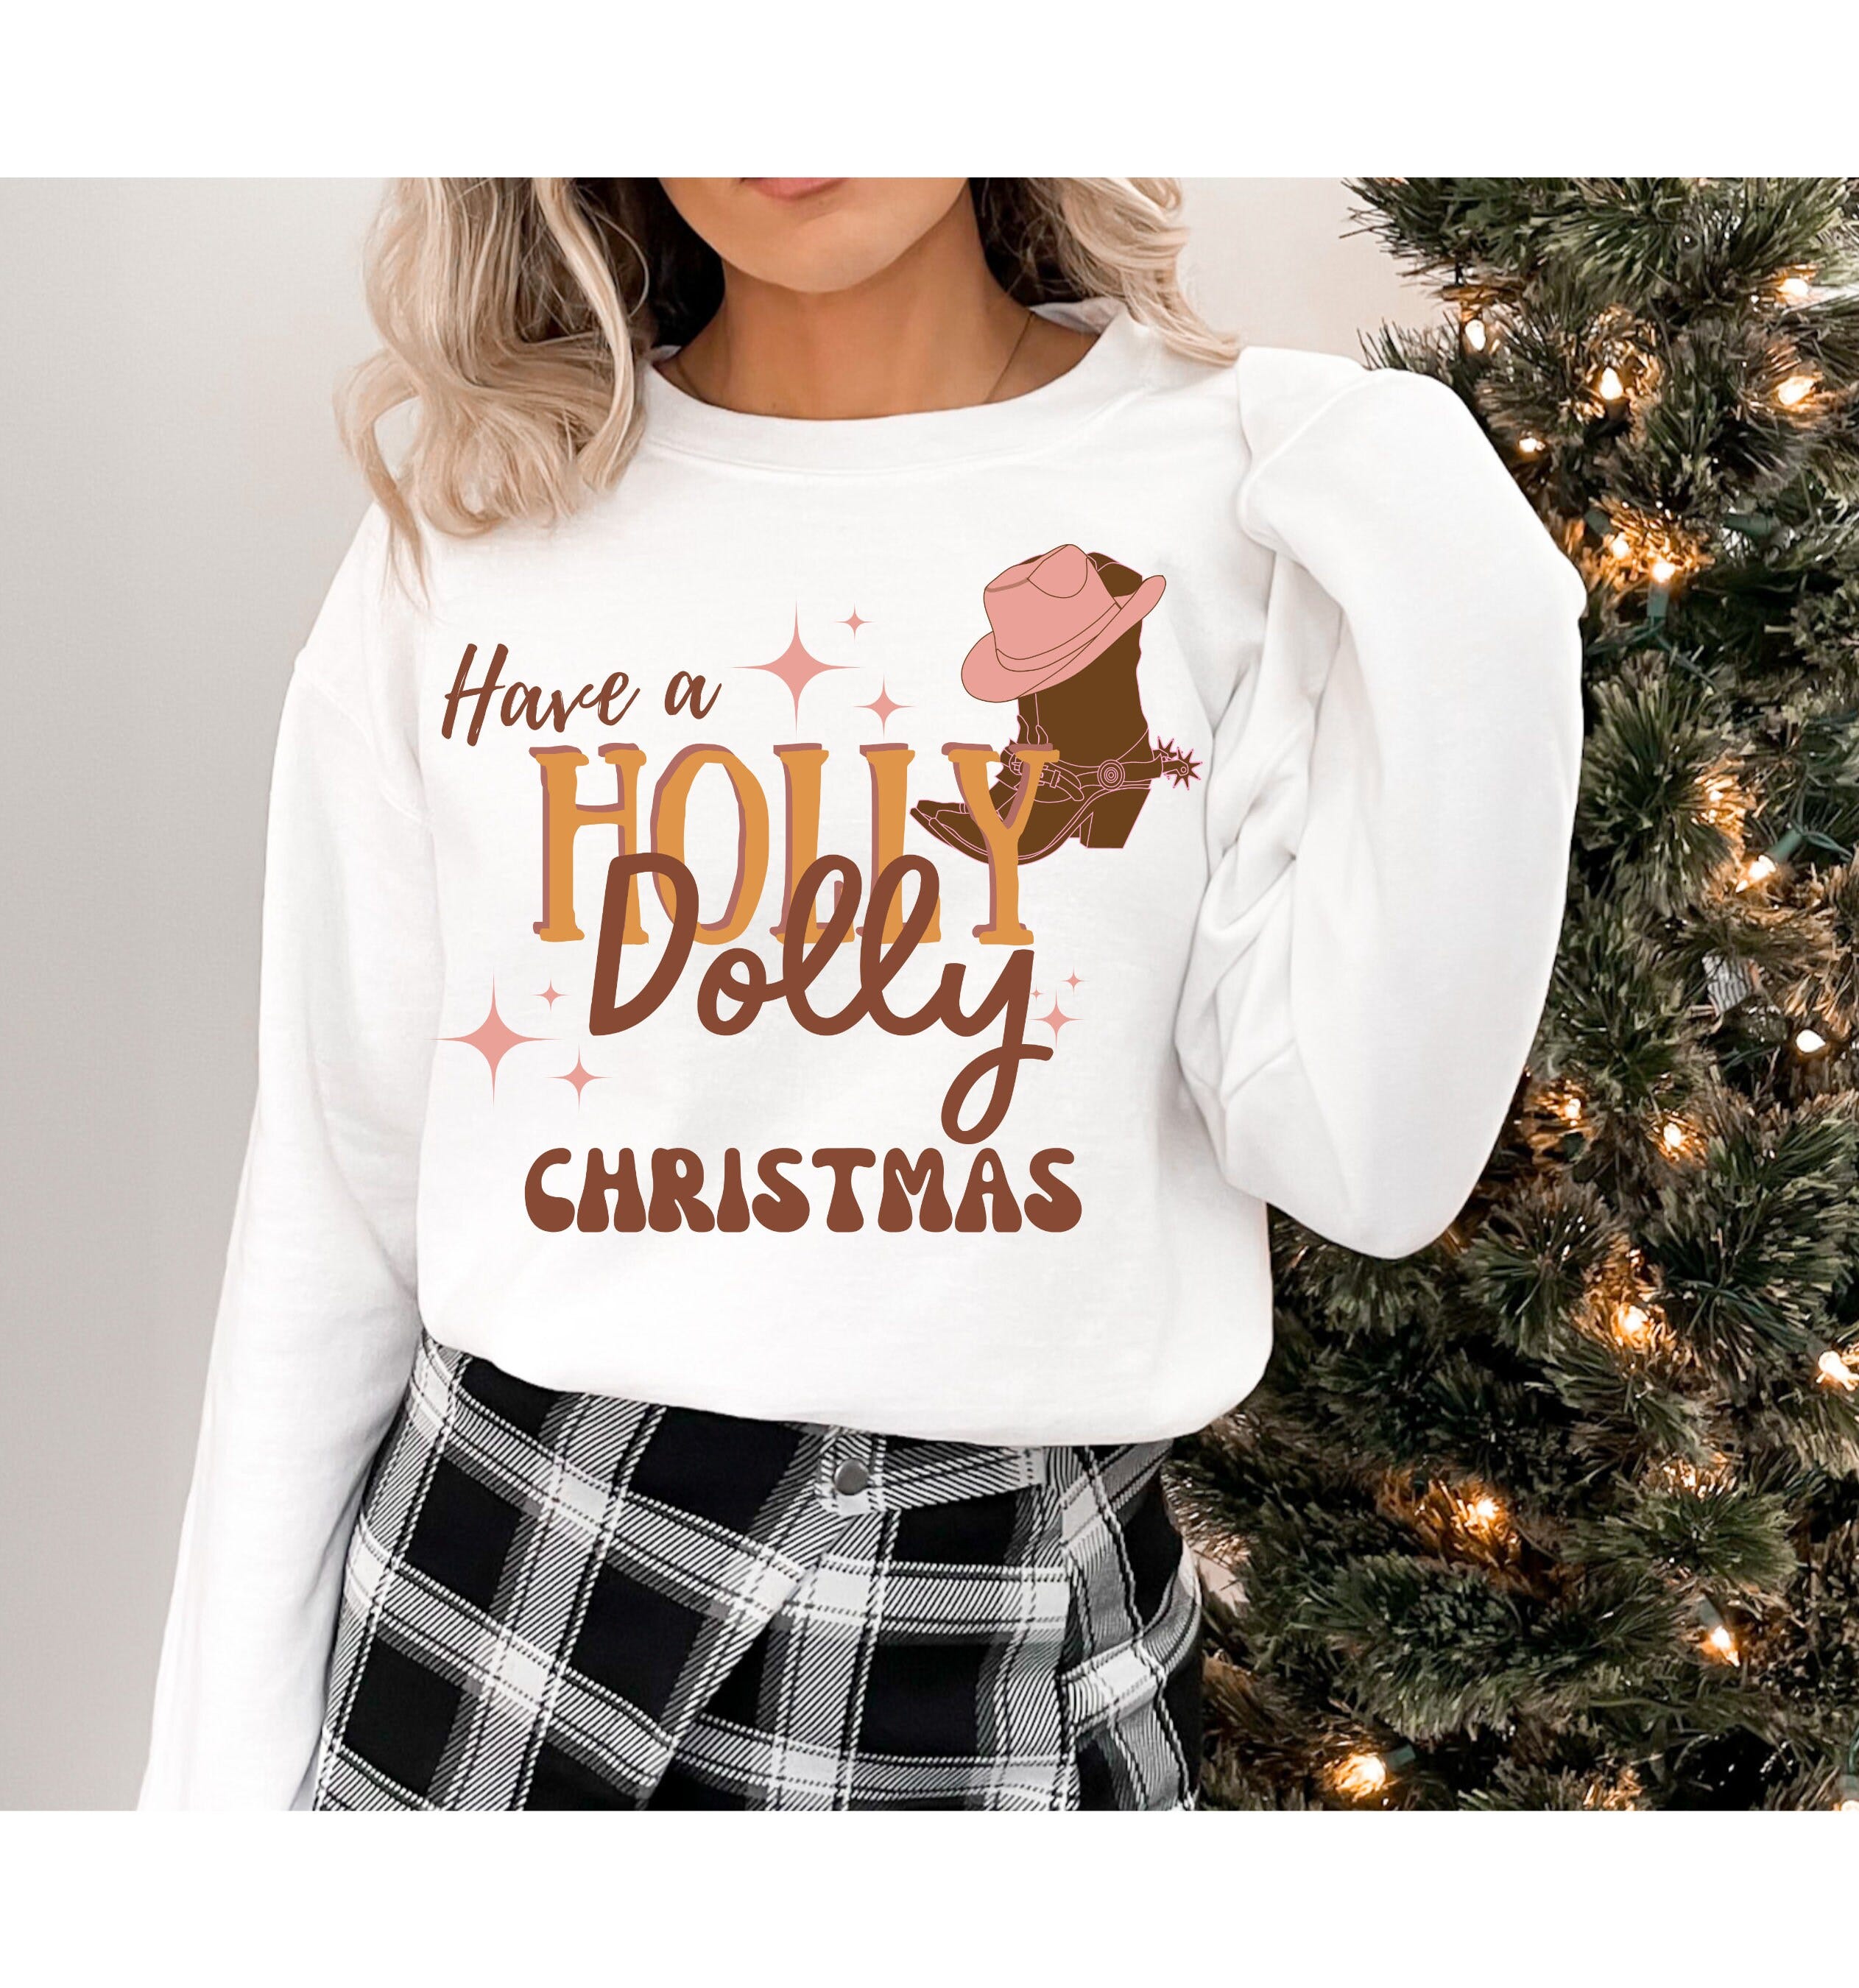 Holly Dolly Retro Christmas SVG, Christmas Shirt Svg, Farmhouse Christmas, Christmas Tree Svg, Christmas Svg, Cowgirl christmas svg file.